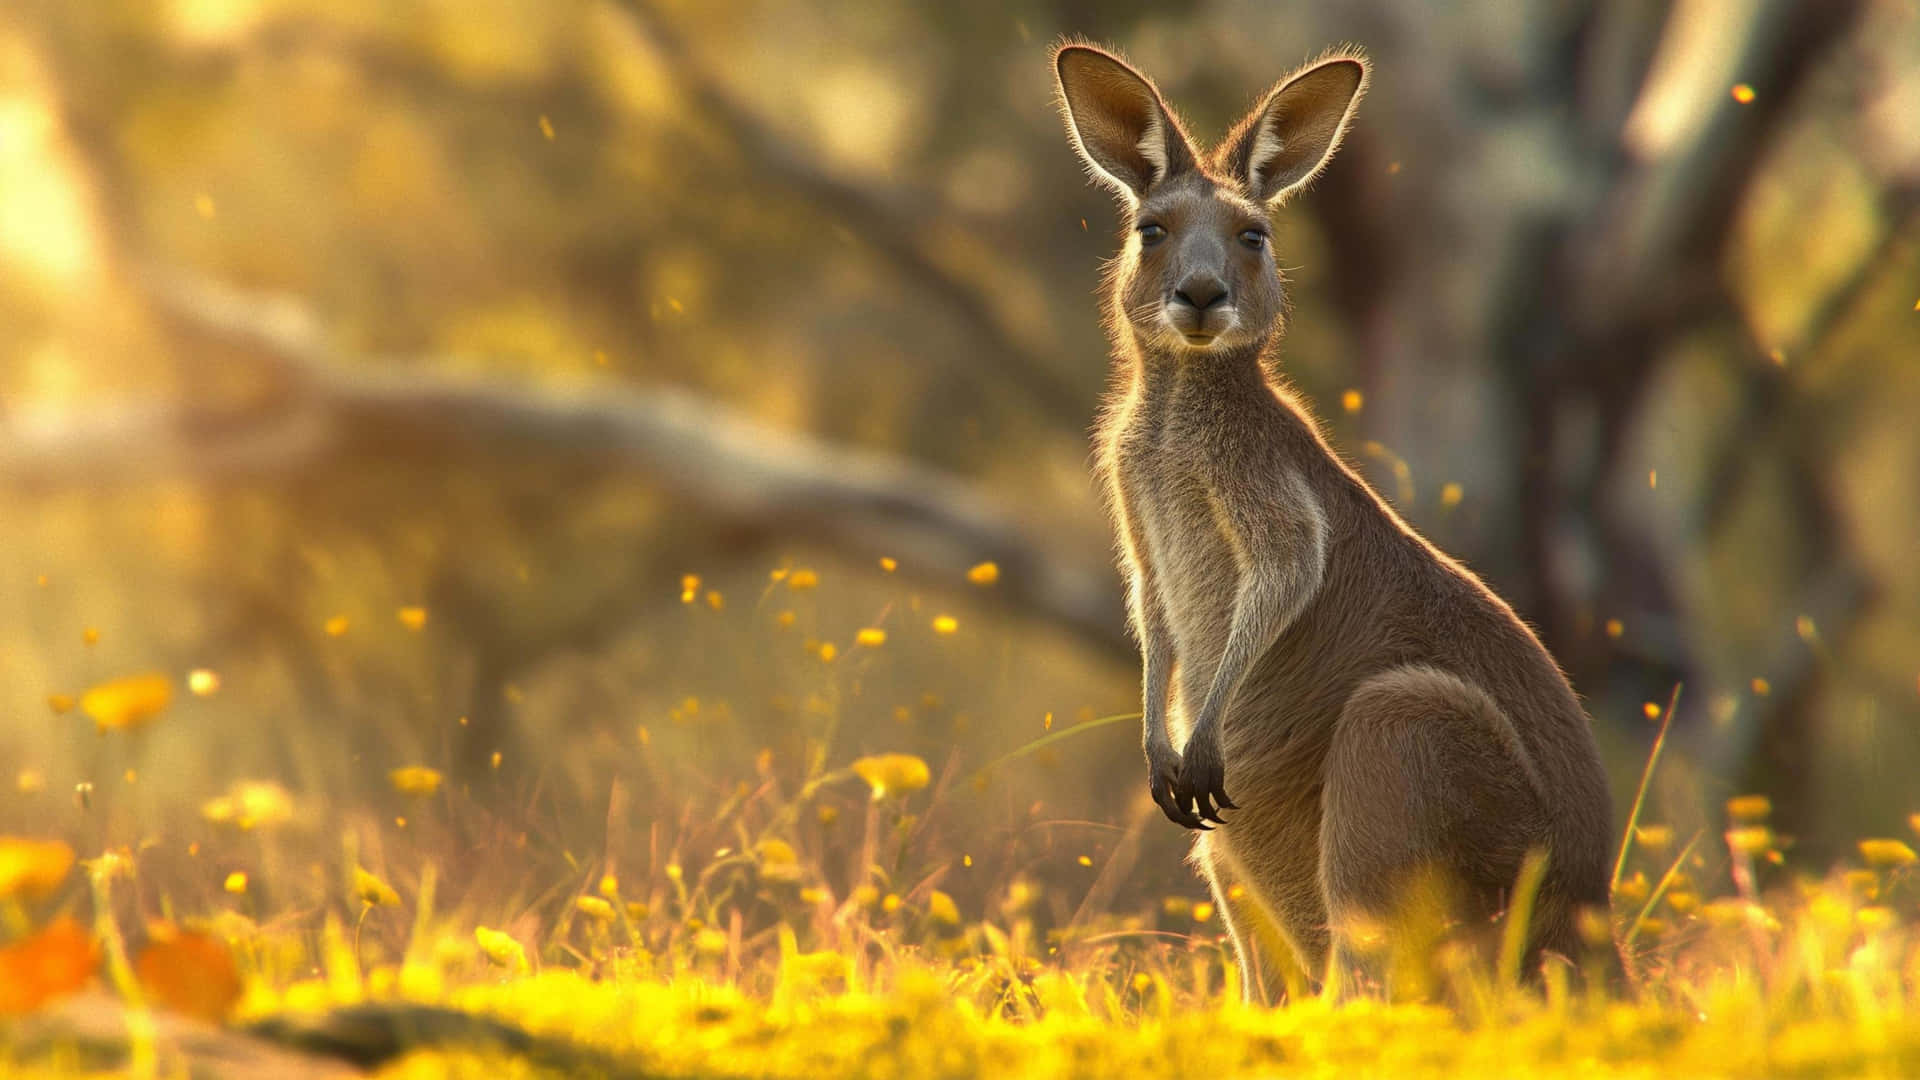 Kangarooin Golden Field4 K Wildlife.jpg Wallpaper